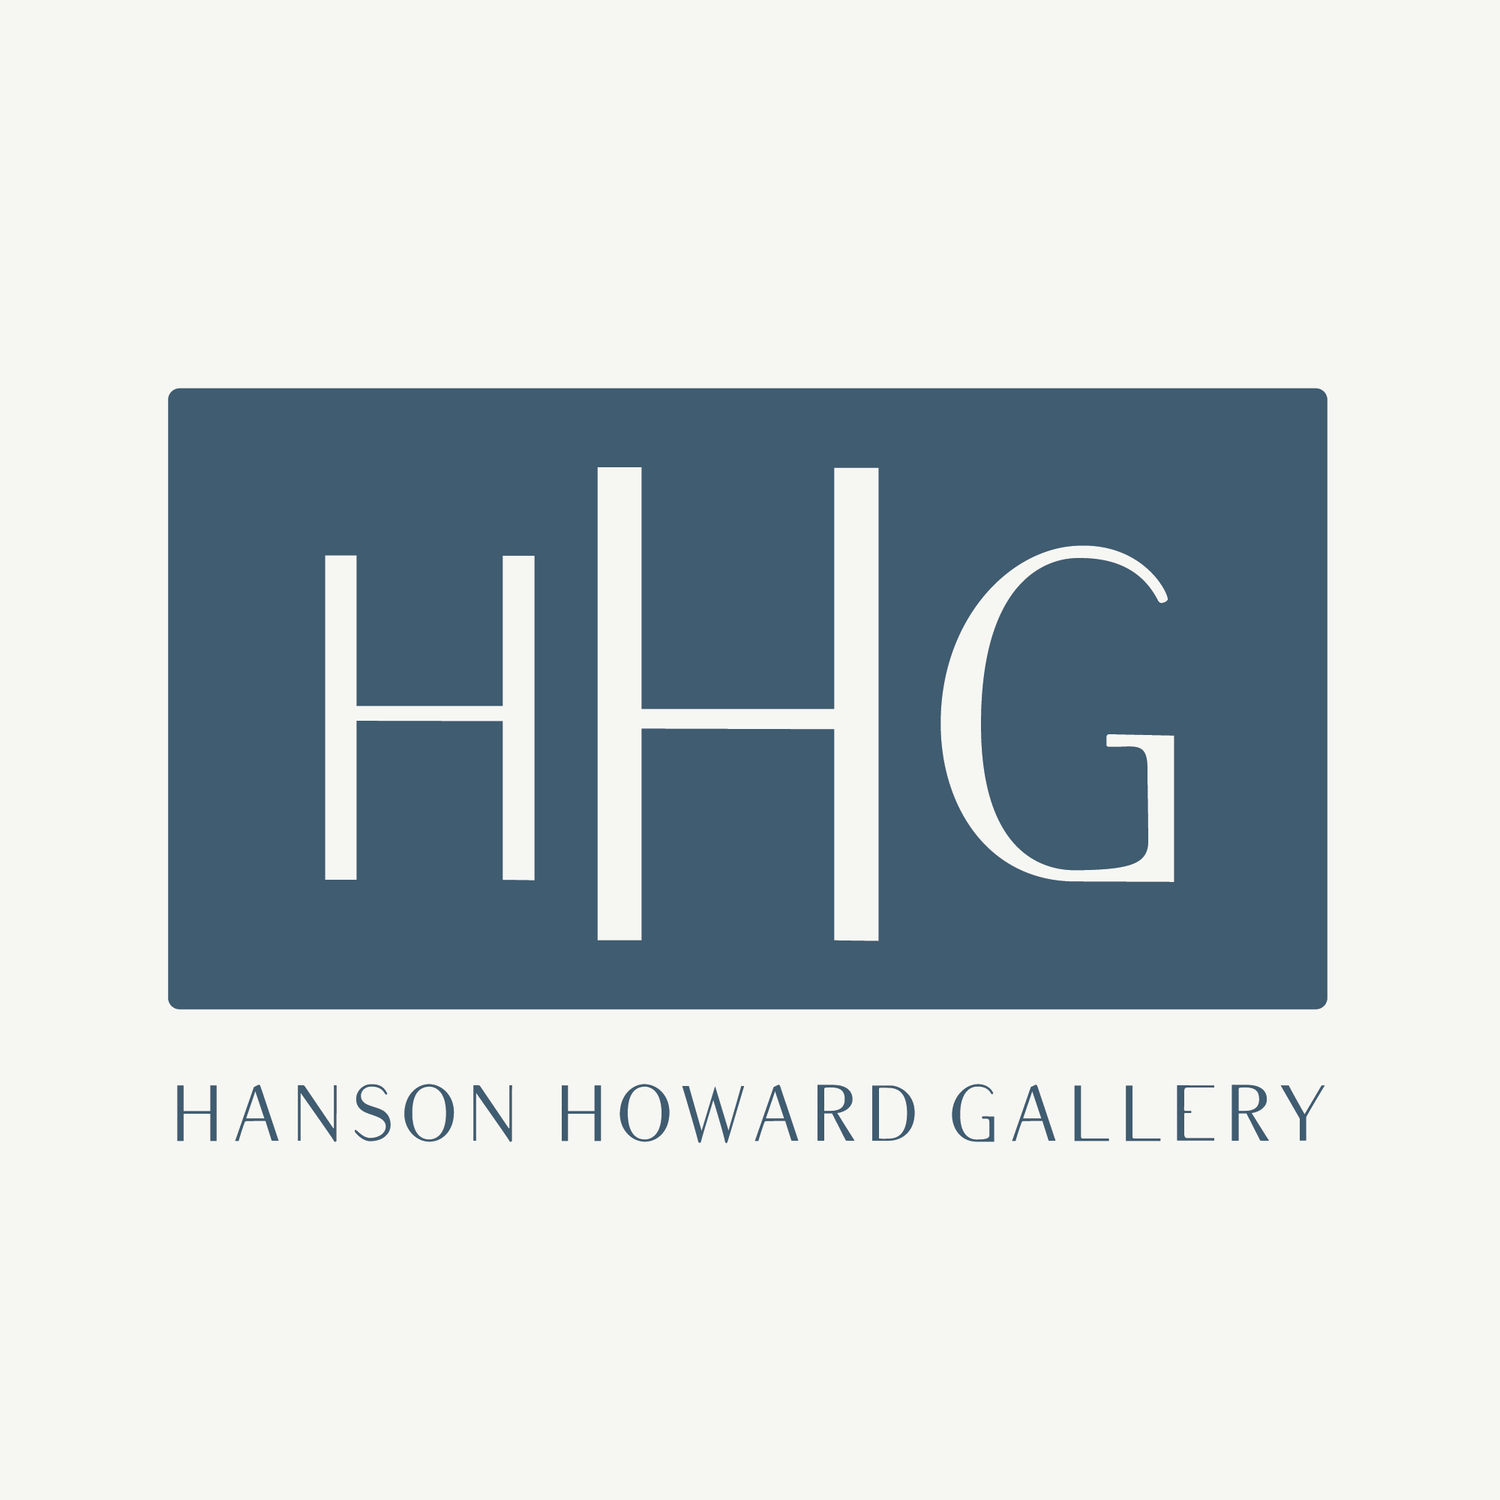 Hanson Howard Gallery